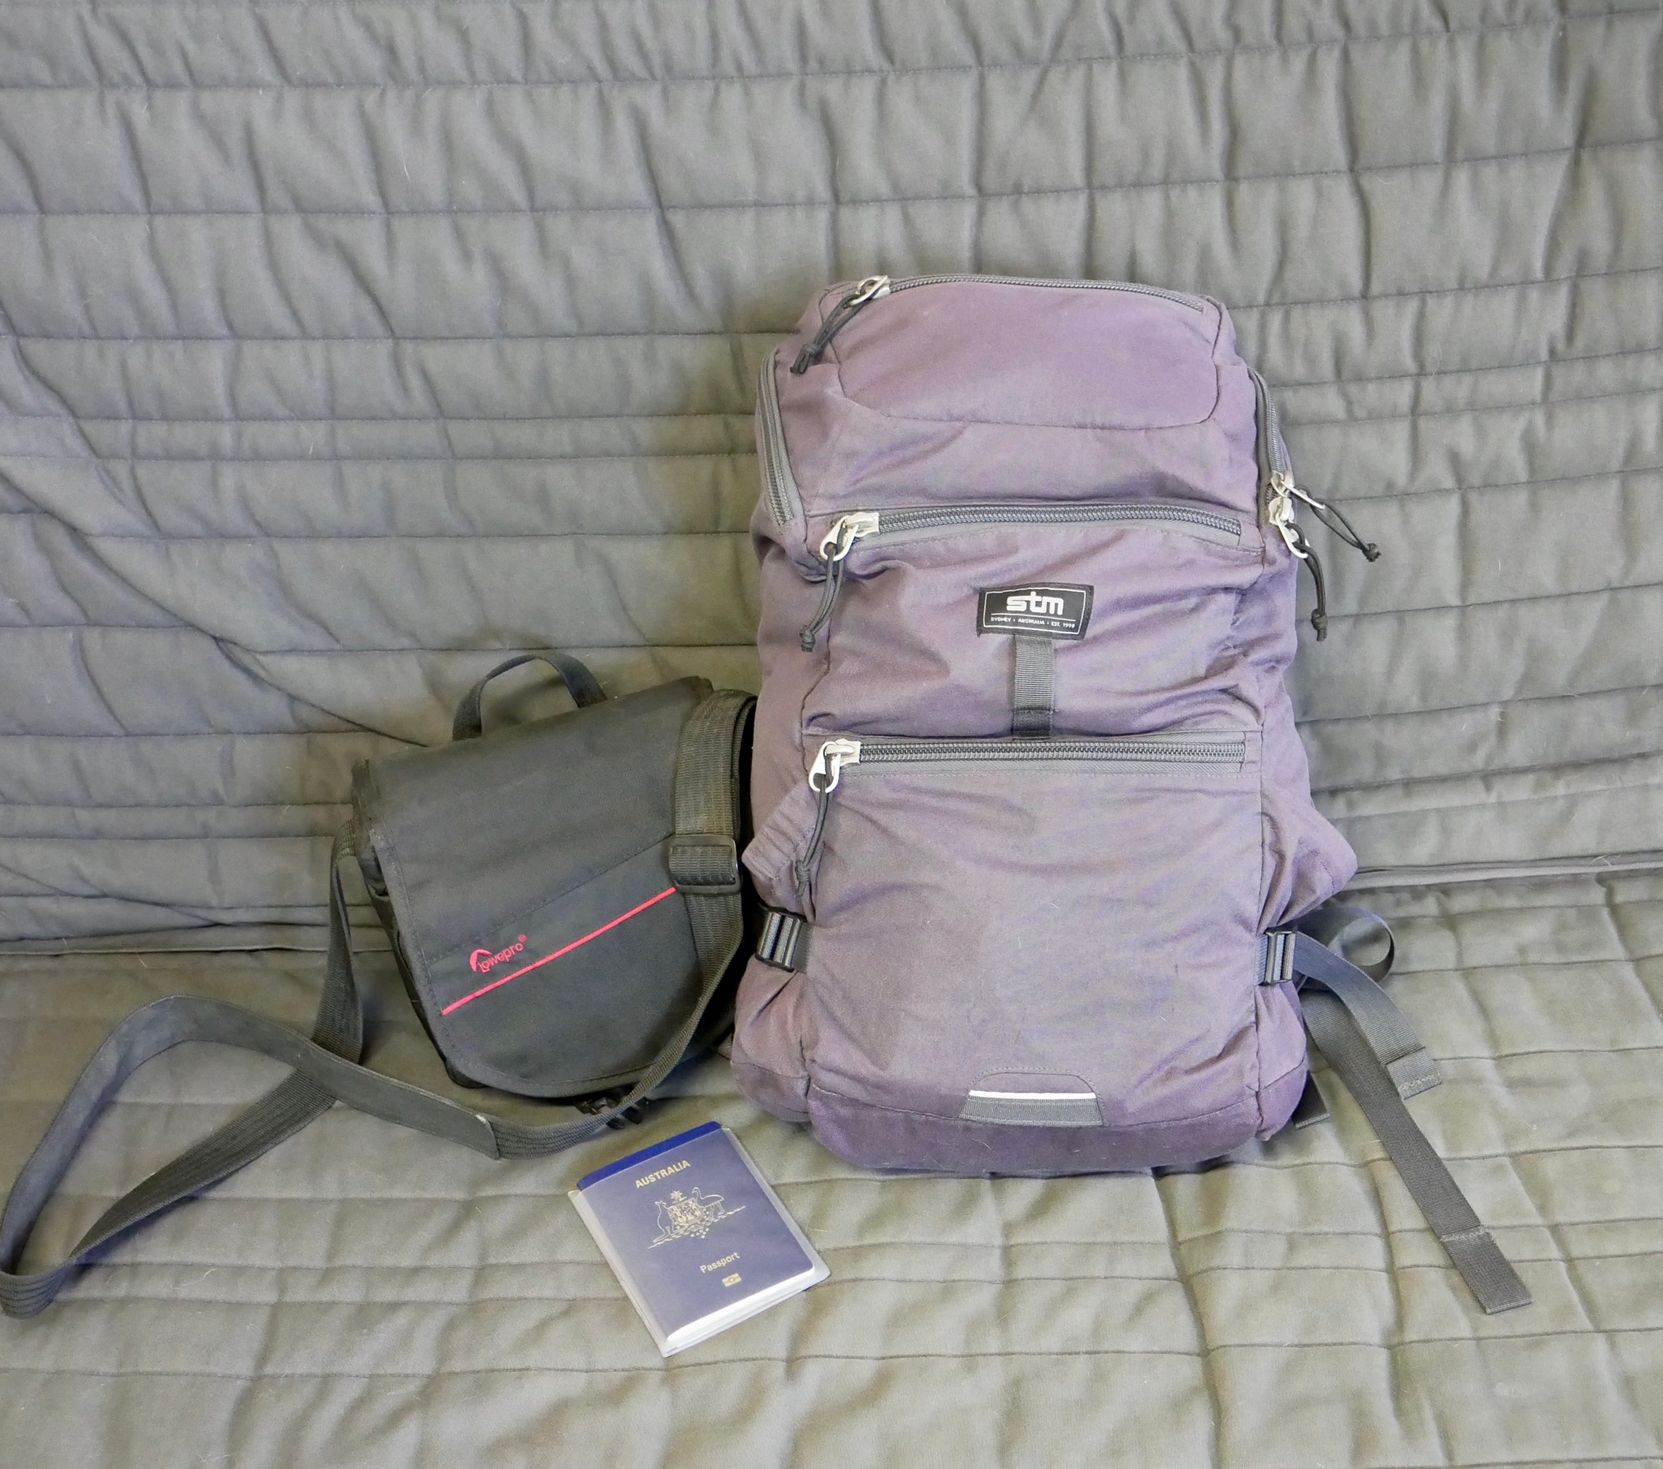 Backpack and camera bag